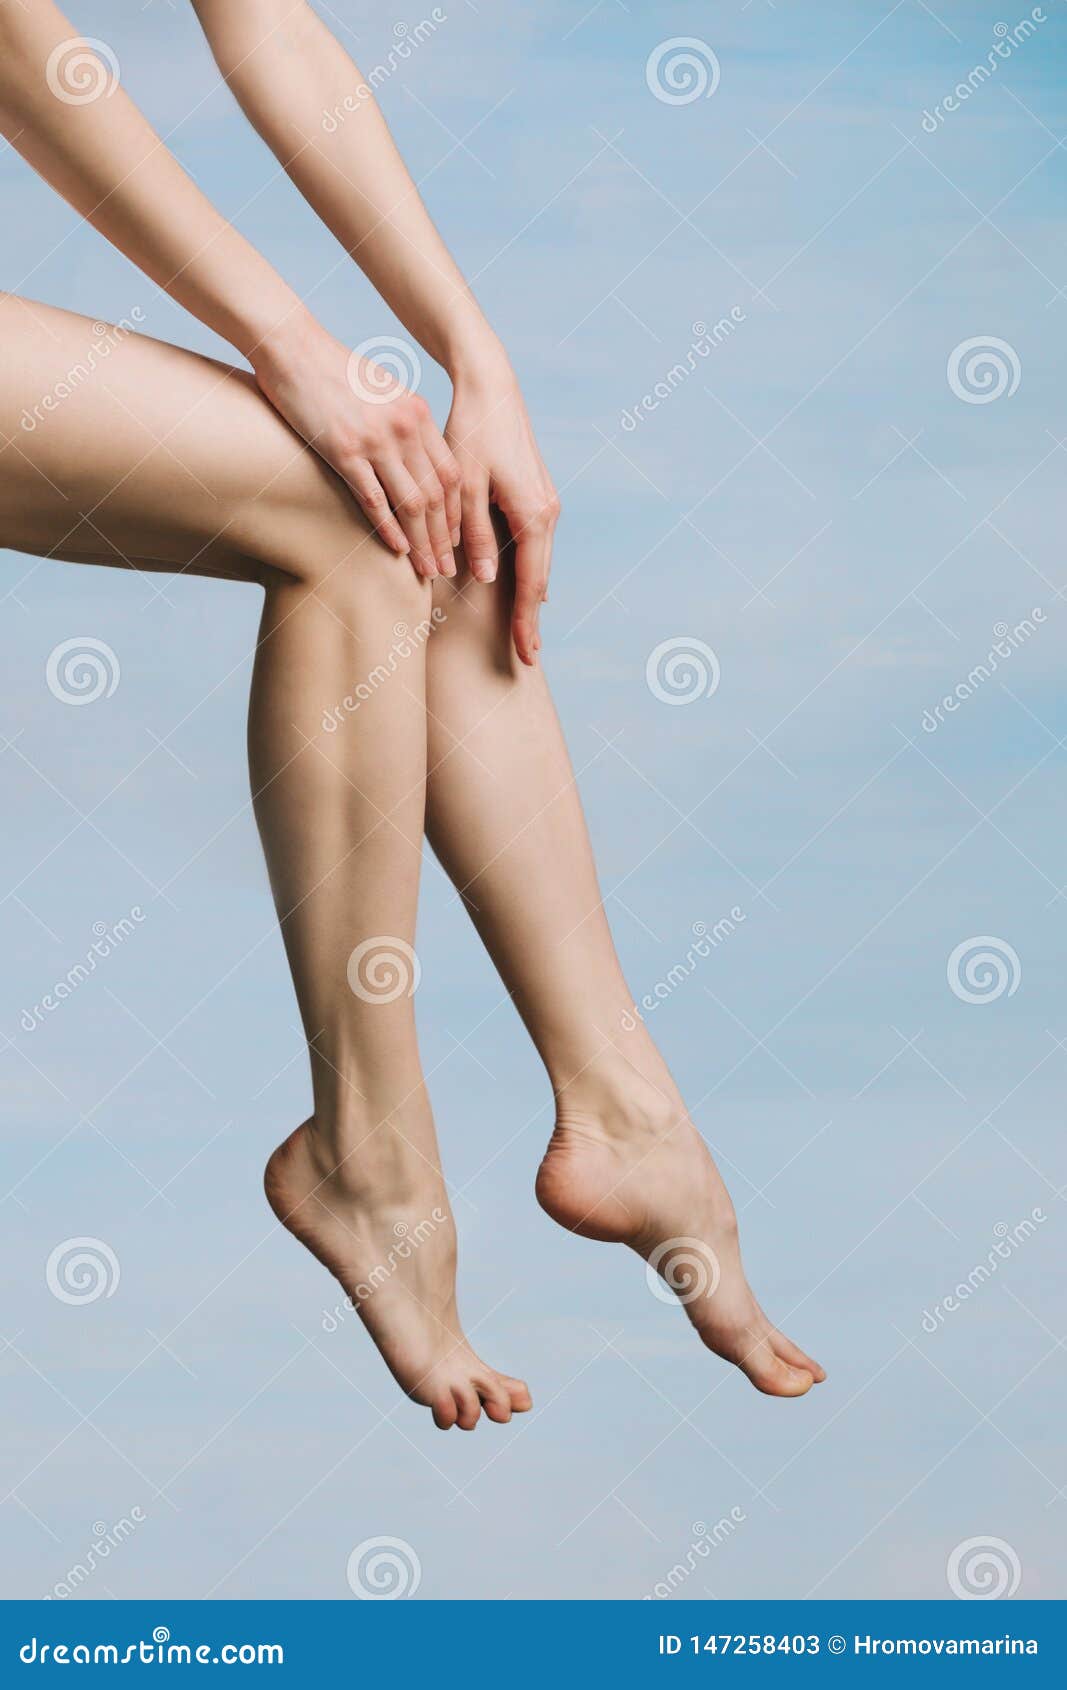 Nude Female Legs